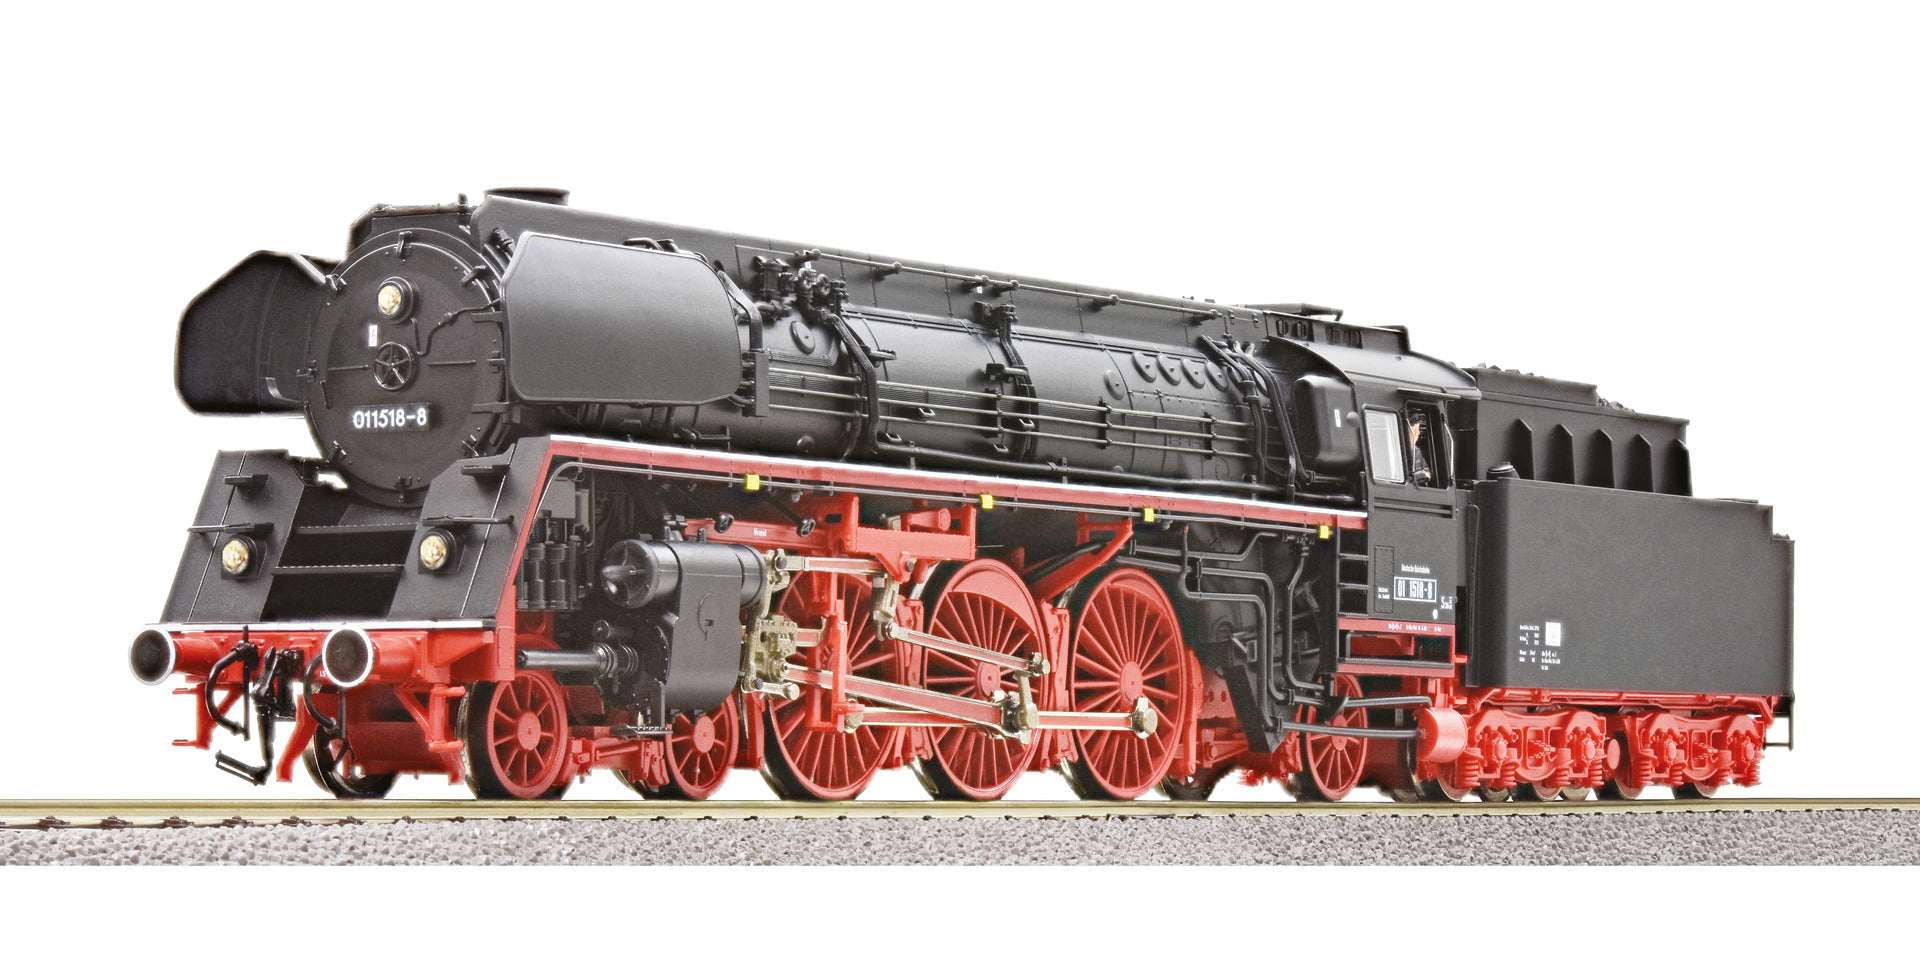 Roco 71266, Steam Locomotive 01 1518-8, DR, EP IV, With Sound